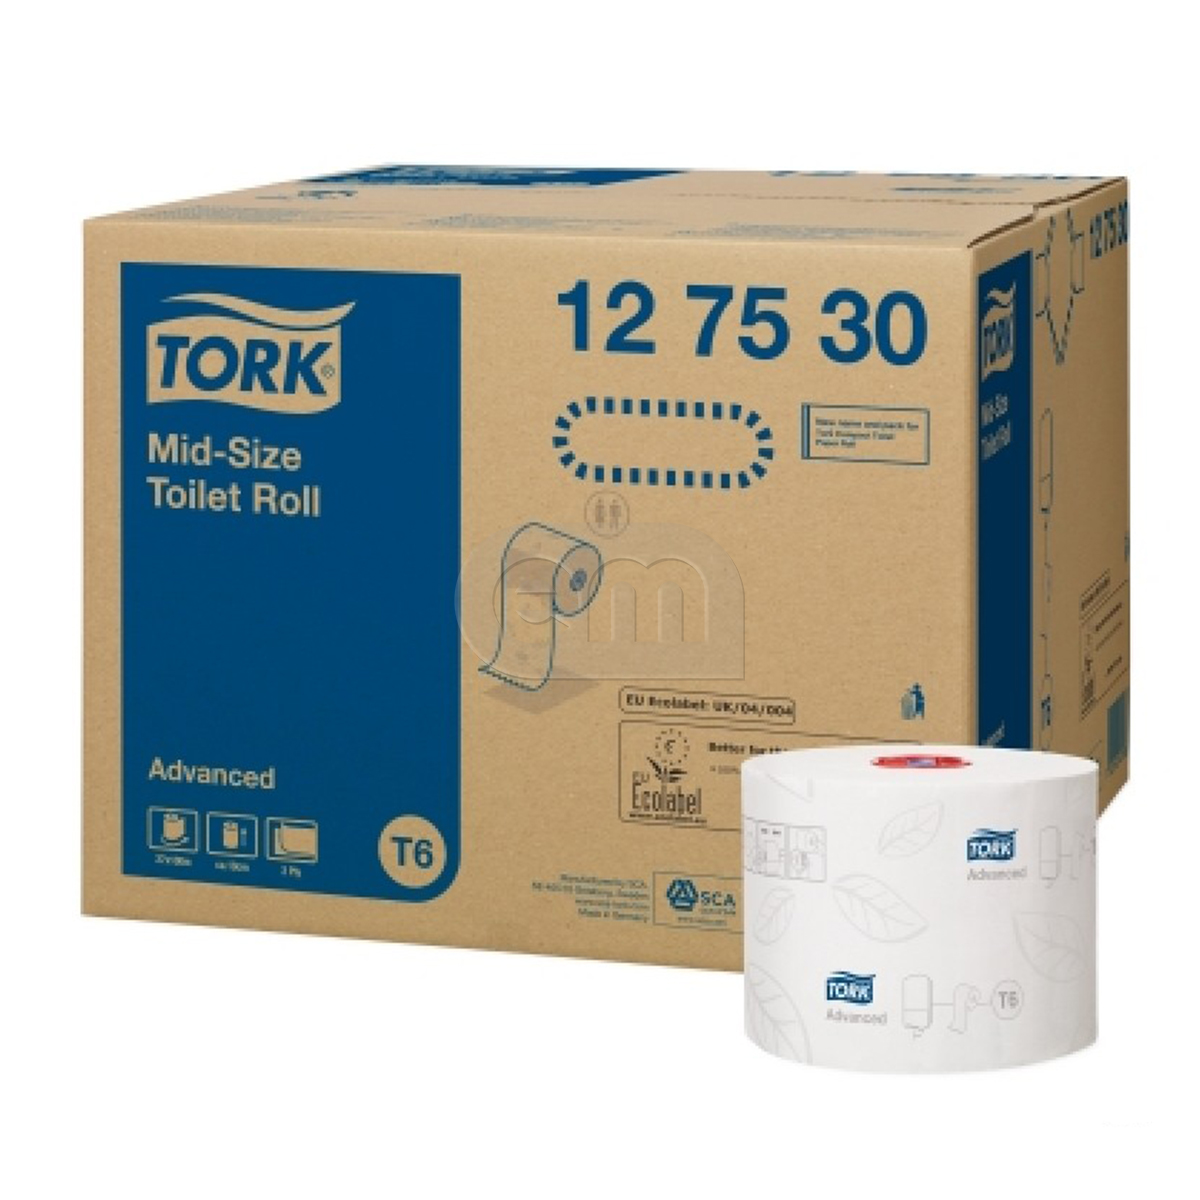 Туалетная бумага 2-сл "Tork Mid-size advanced T6" 100м 9,9см арт. 127530 (27)